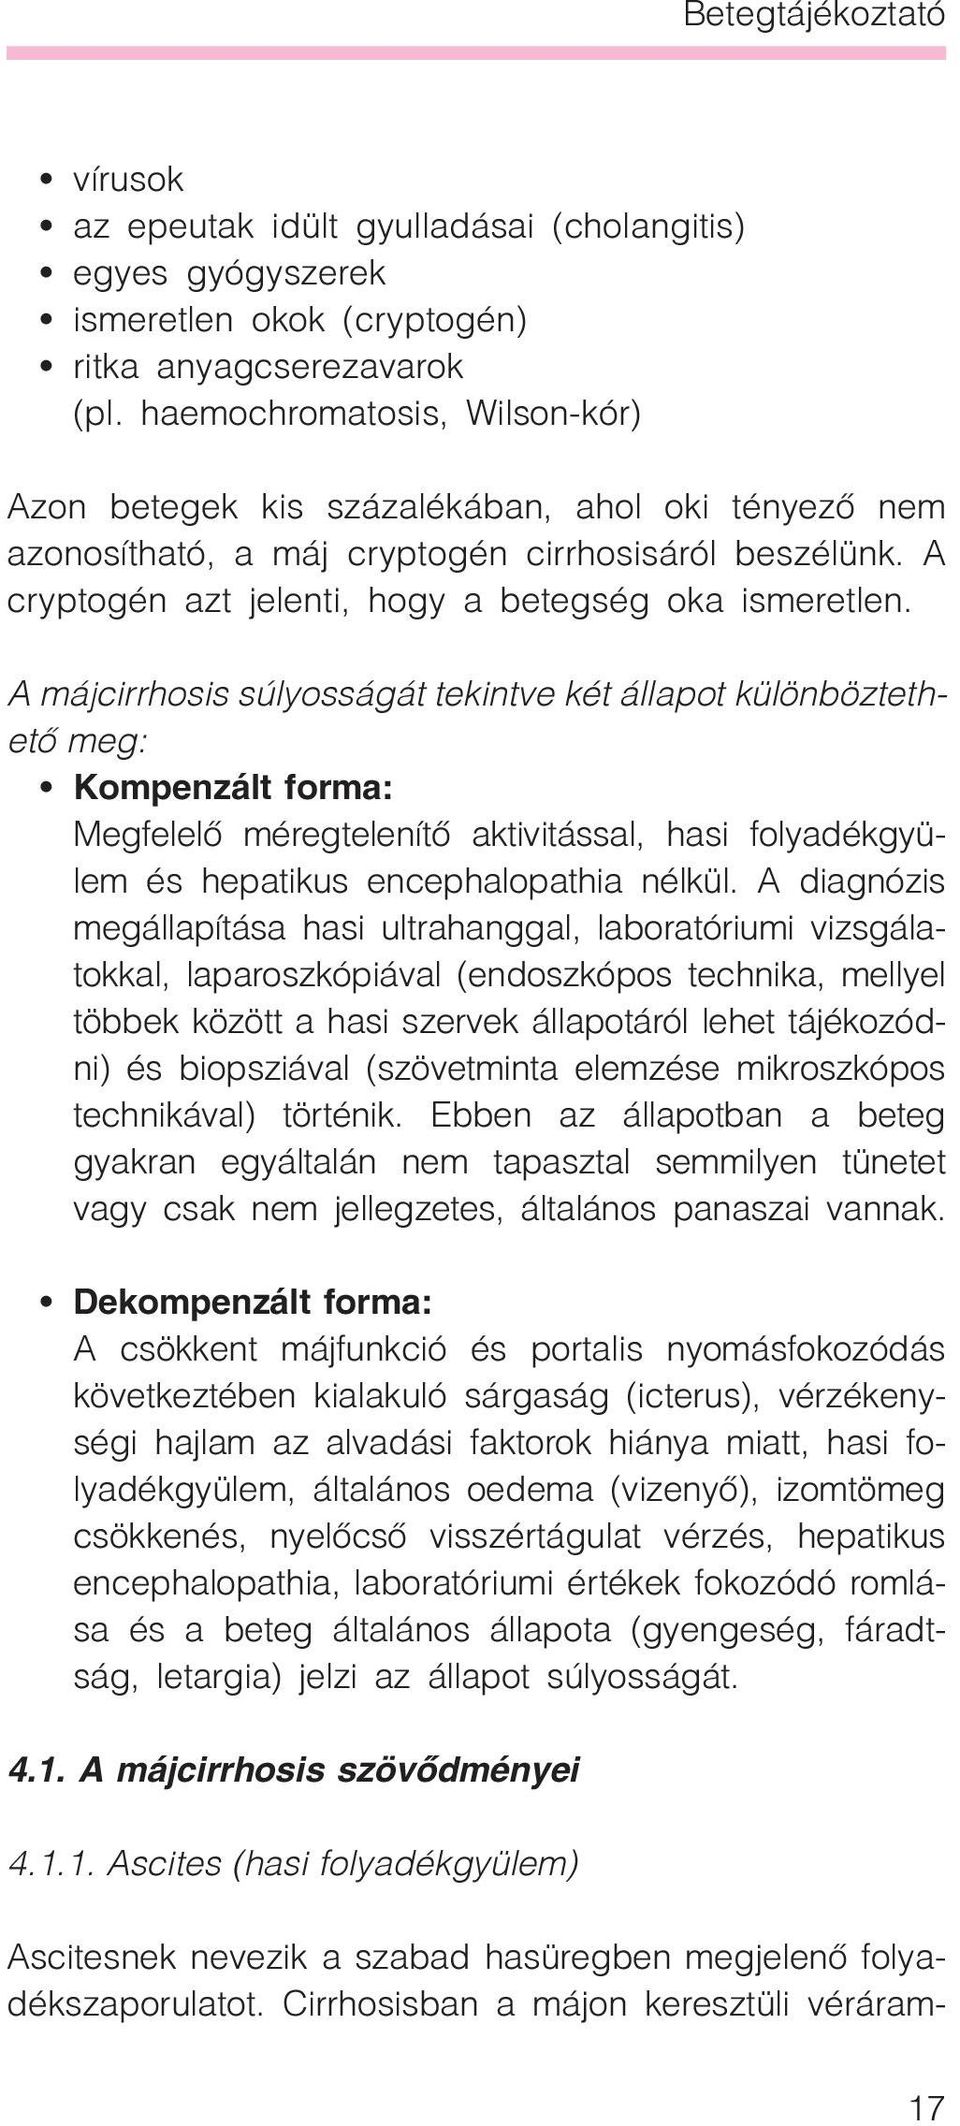 hepatikus encephalopathia diéta)